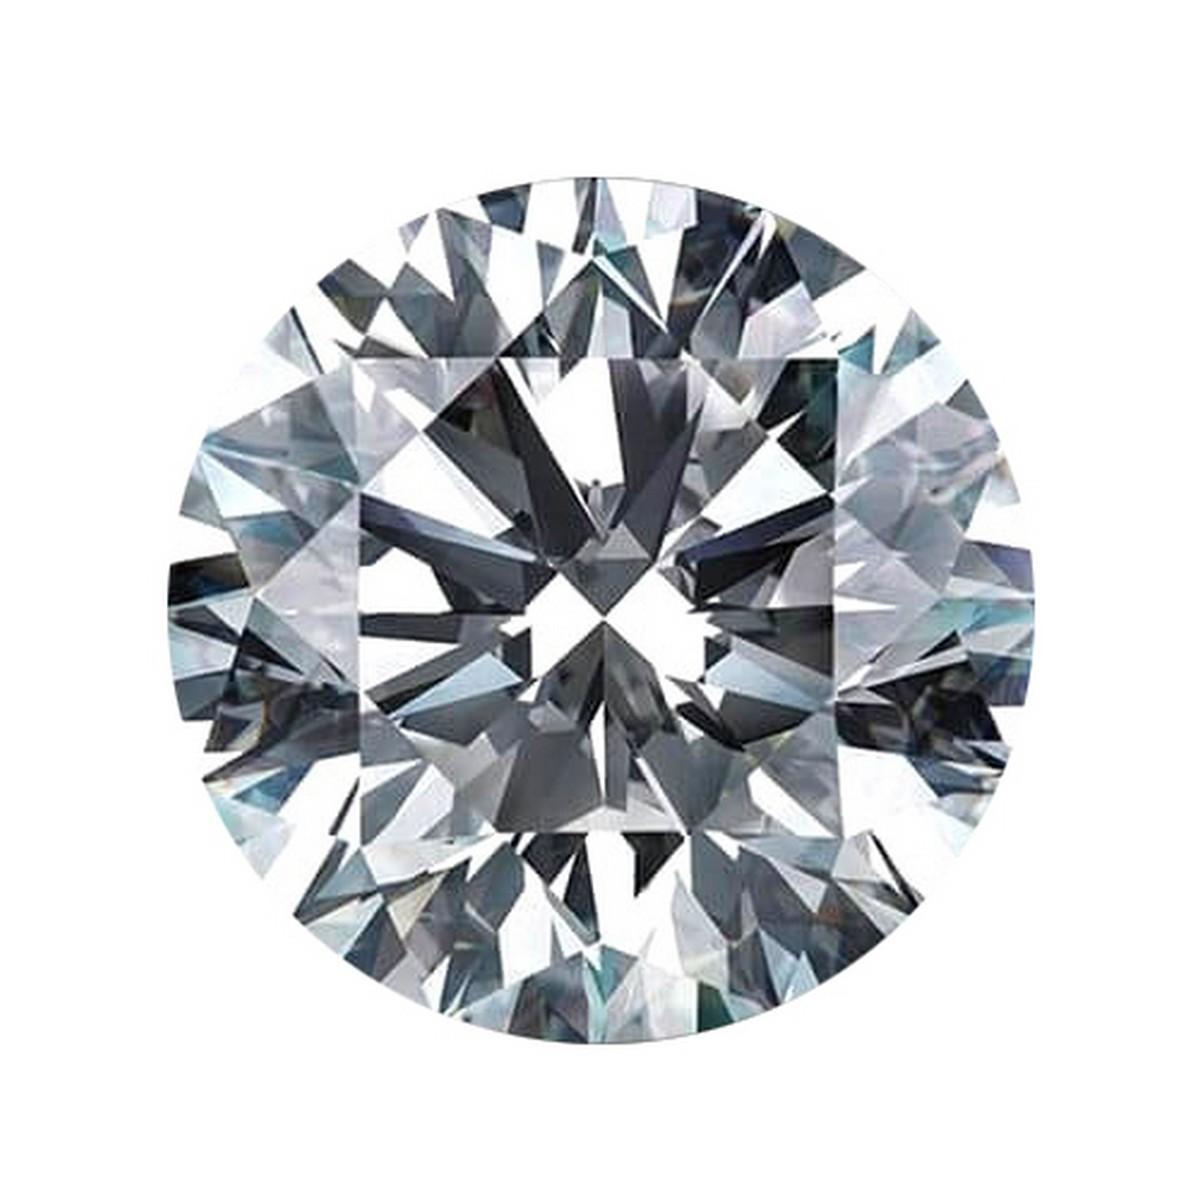 4.01 ctw. VVS2 IGI Certified Round Brilliant Cut Loose Diamond (LAB GROWN)